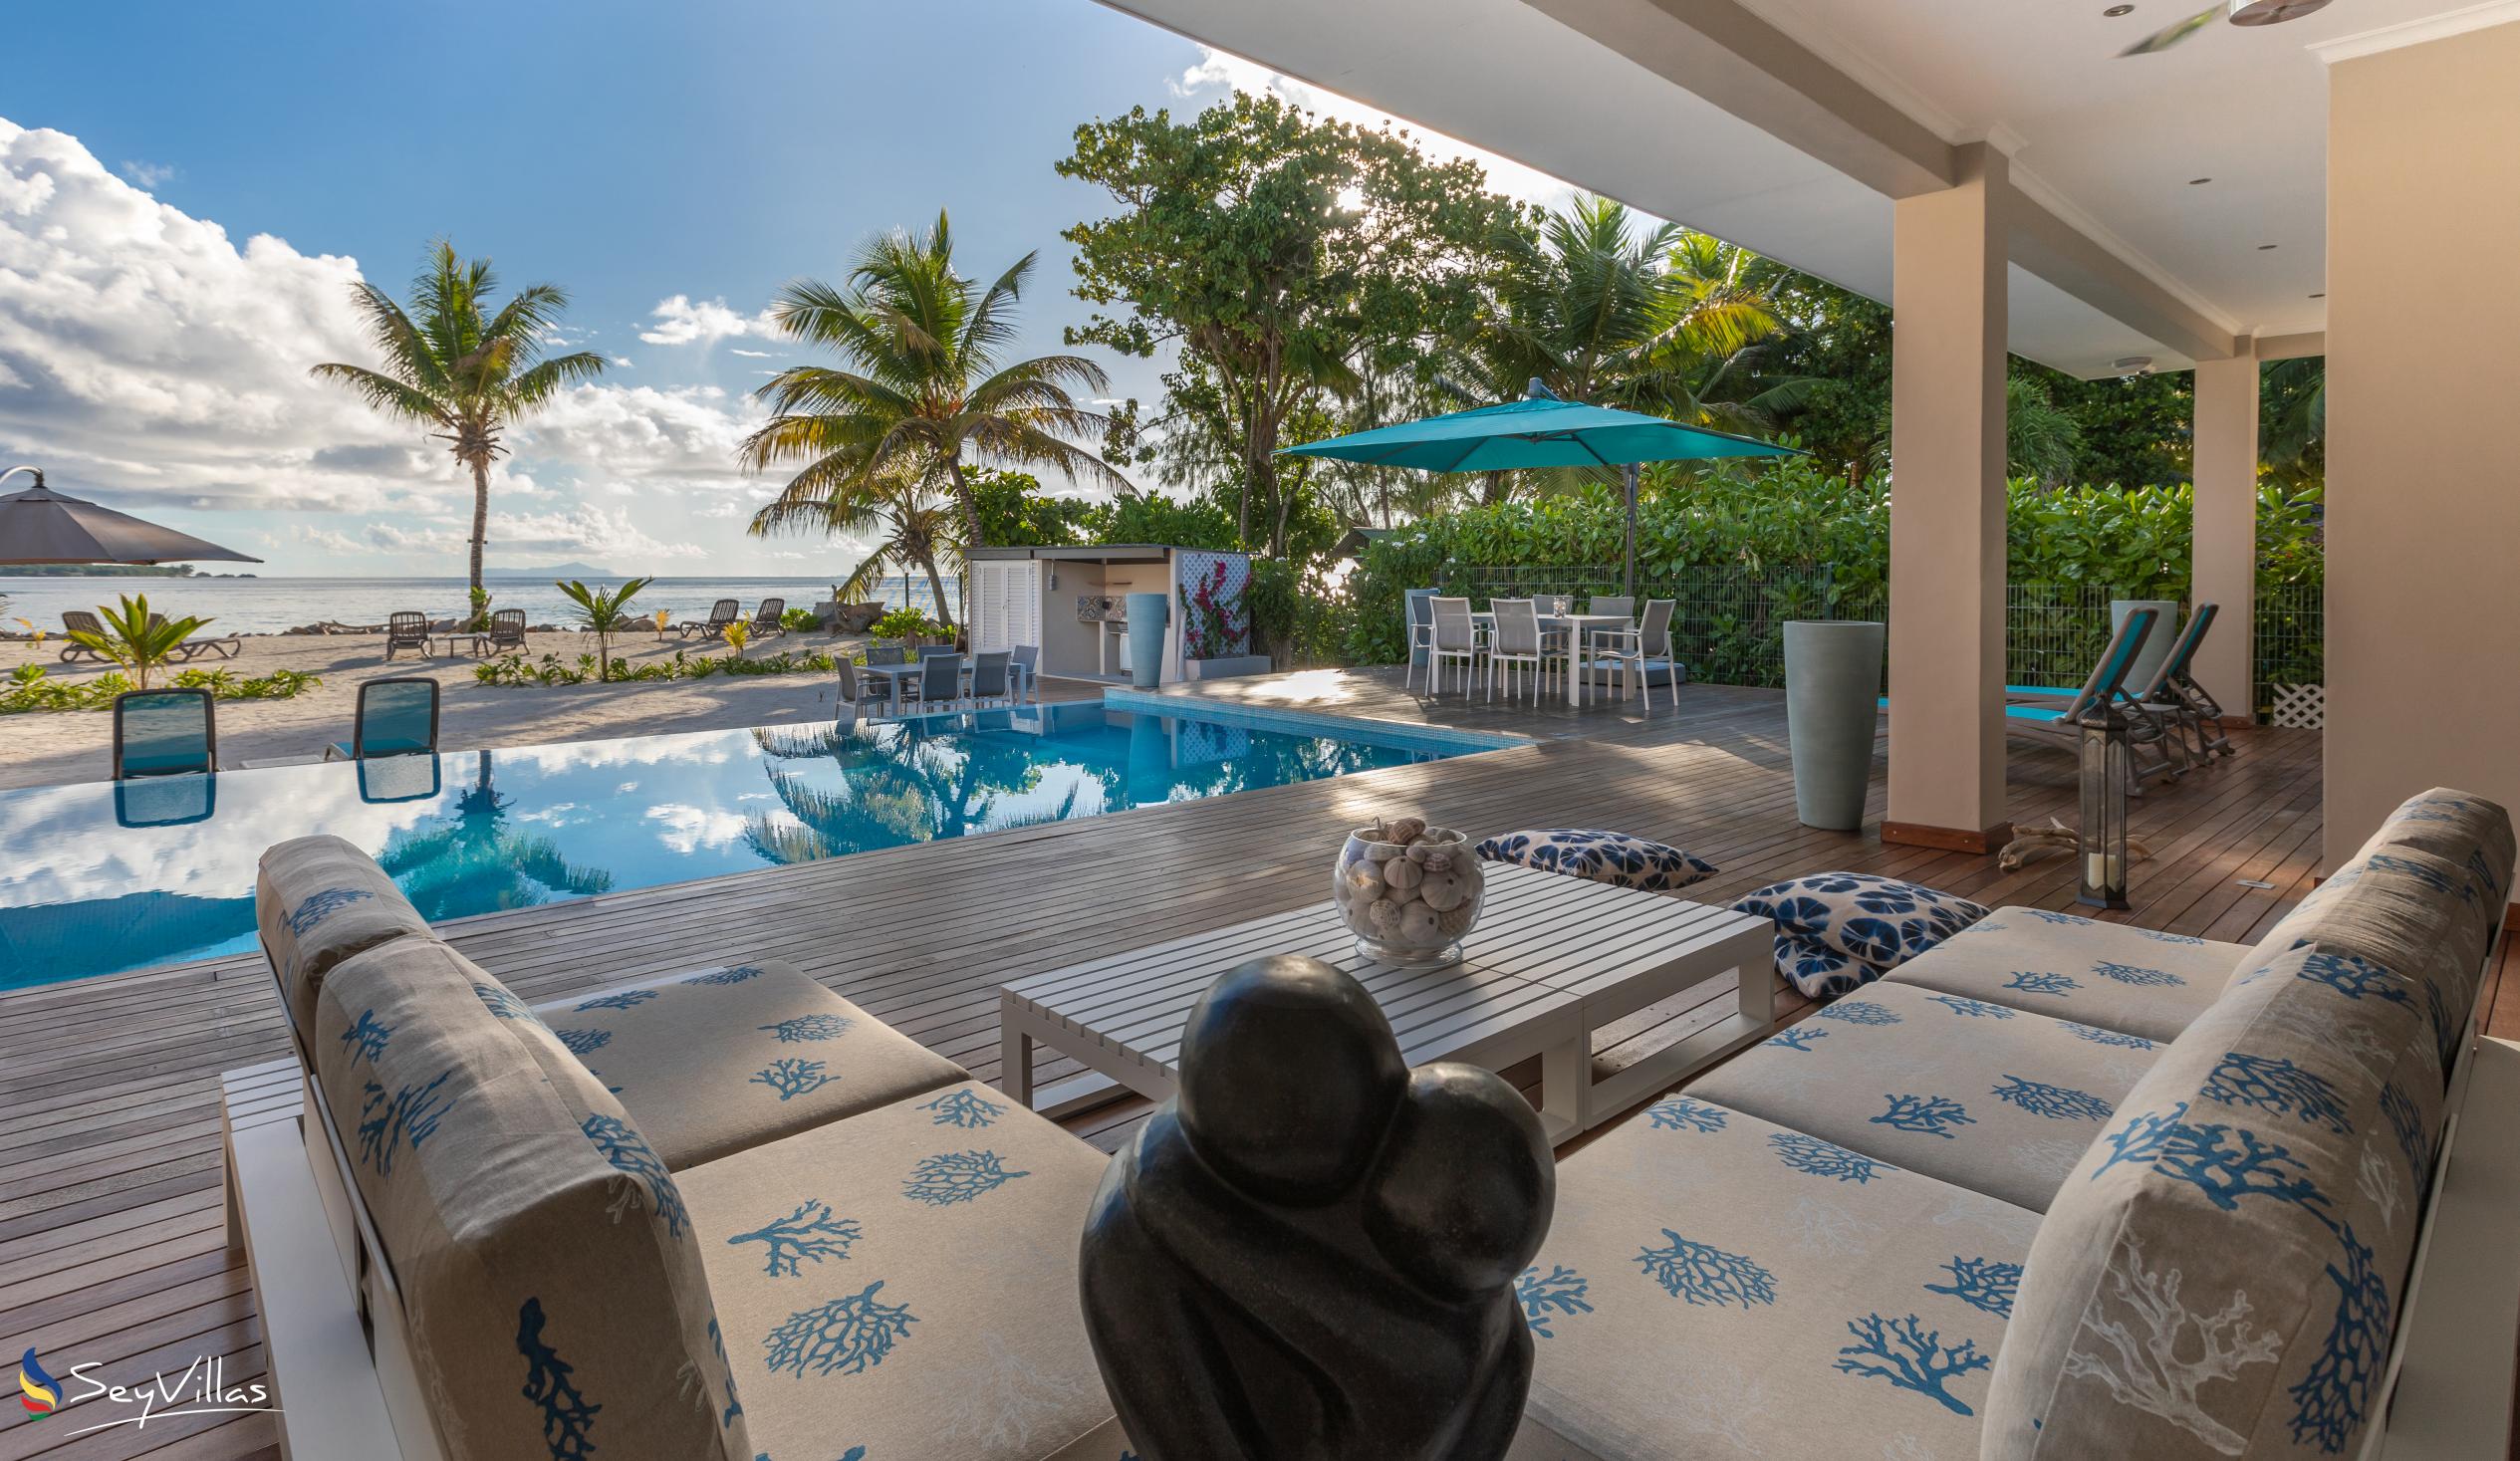 Foto 47: Villas Coco Beach - La Maison Villas Coco Beach - Praslin (Seychelles)